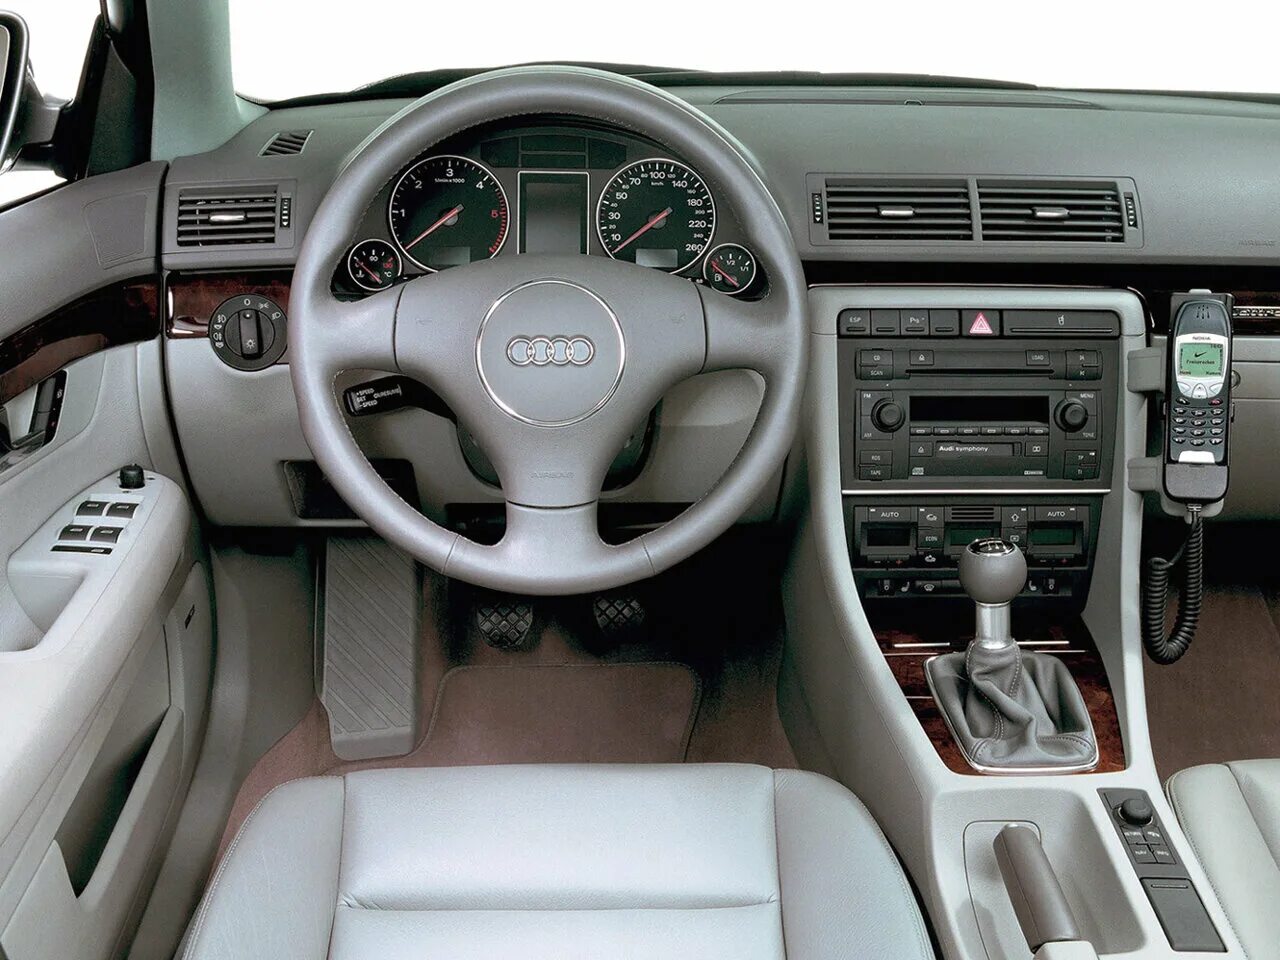 Торпеда 2001. Audi a4 b6 2001. Audi a4 b5 Interior. Audi a4, 2000 1.8 quattro tiptronic. Audi a4 b6 2000-2005.